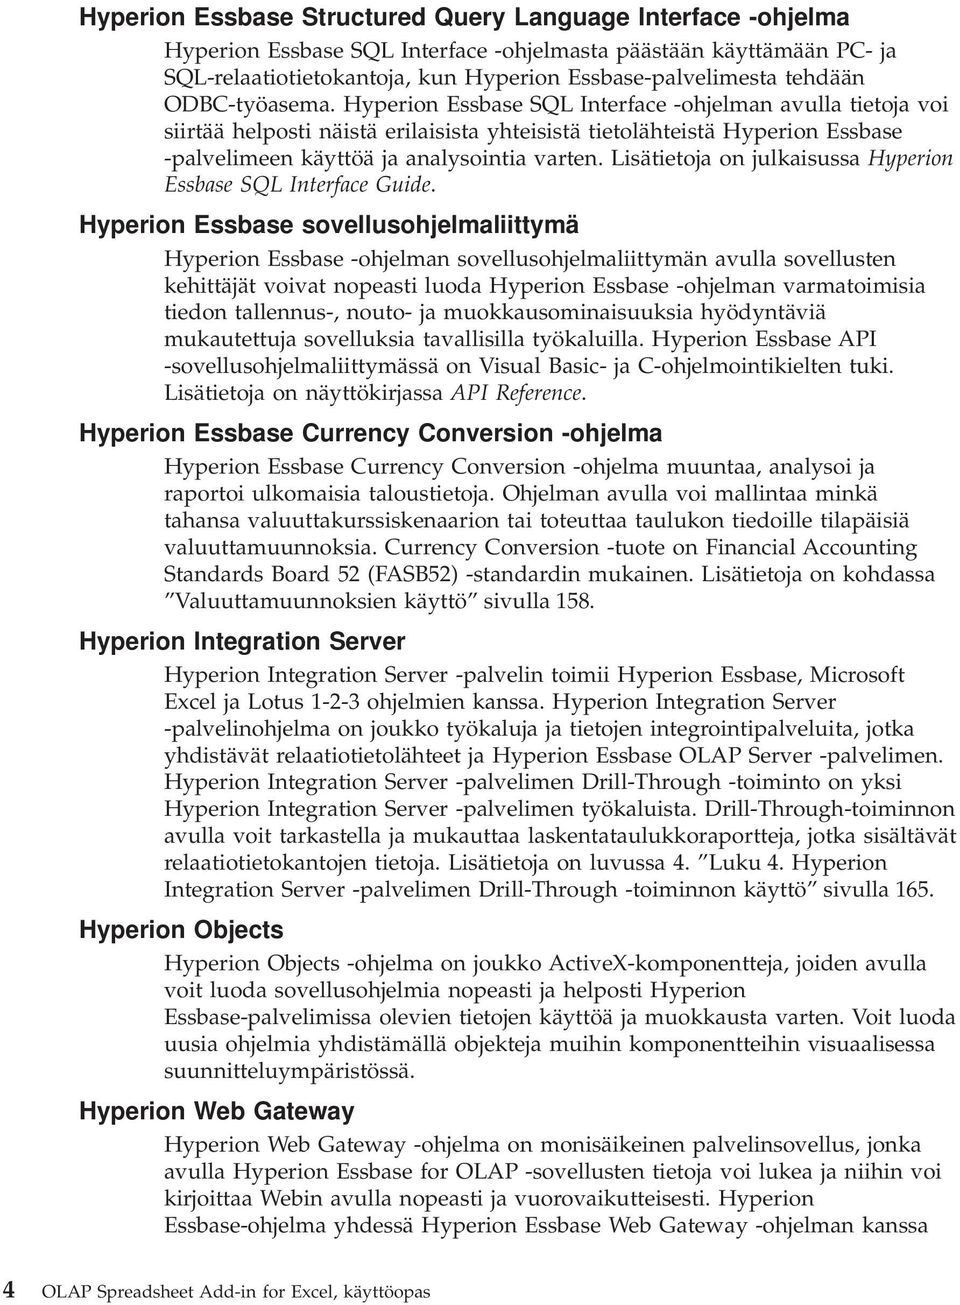 Lisätietoja on julkaisussa Hyperion Essbase SQL Interface Guide.